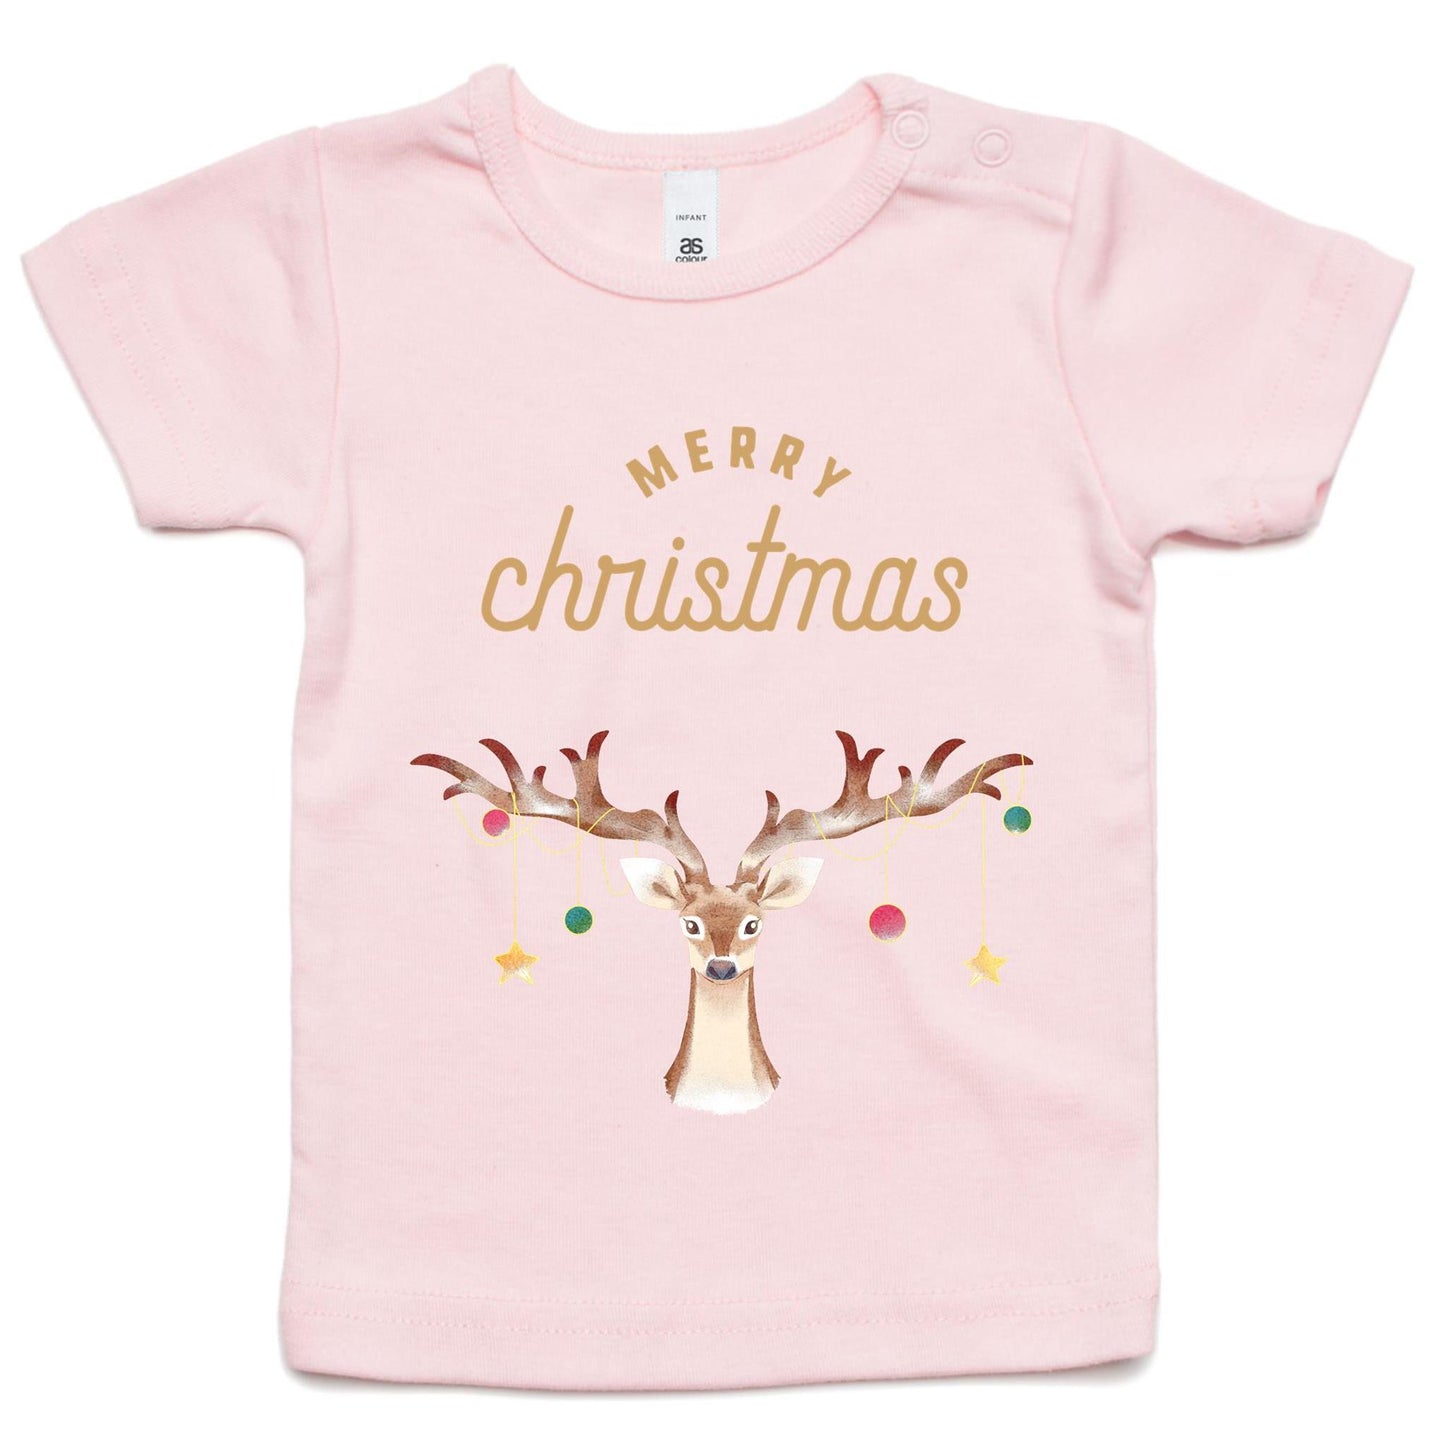 Merry Christmas Reindeer - Baby T-shirt Pink Christmas Baby T-shirt Merry Christmas